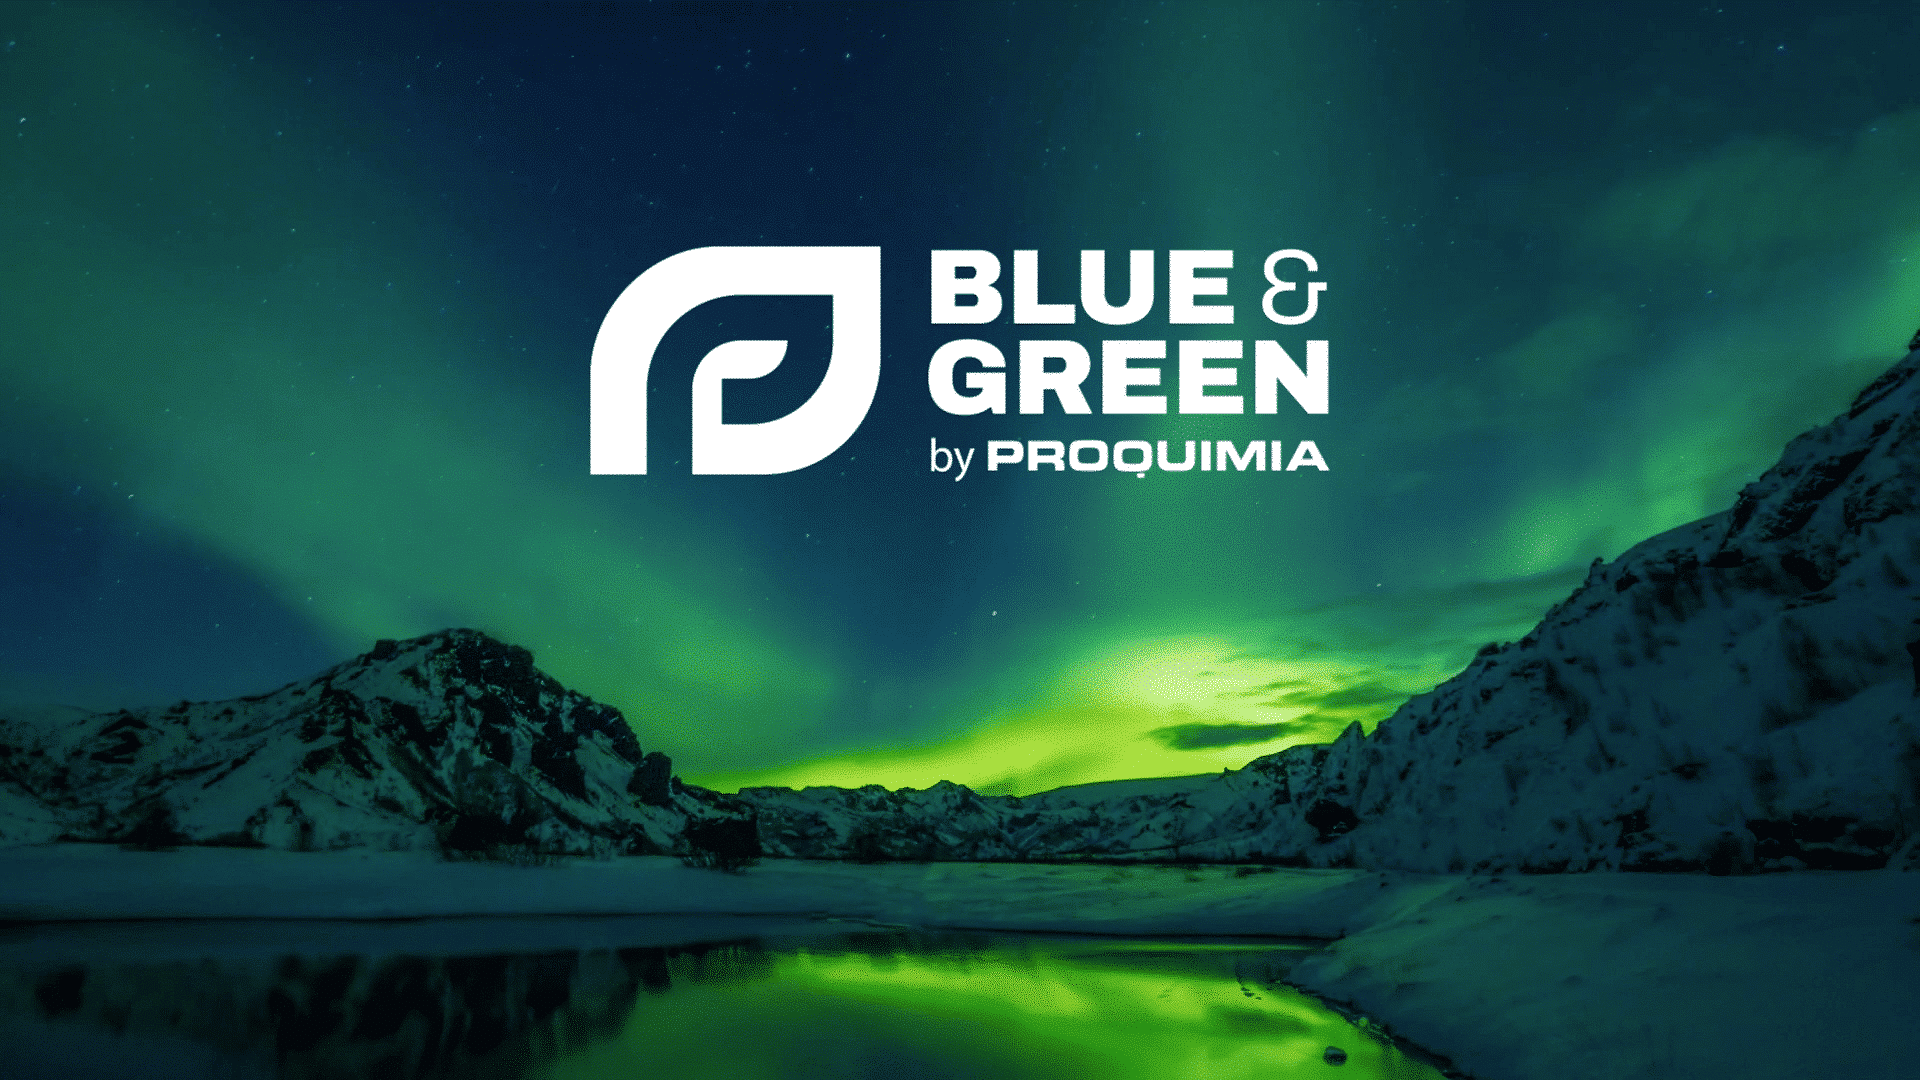 Blue&Green Proquimia sustentabilidade